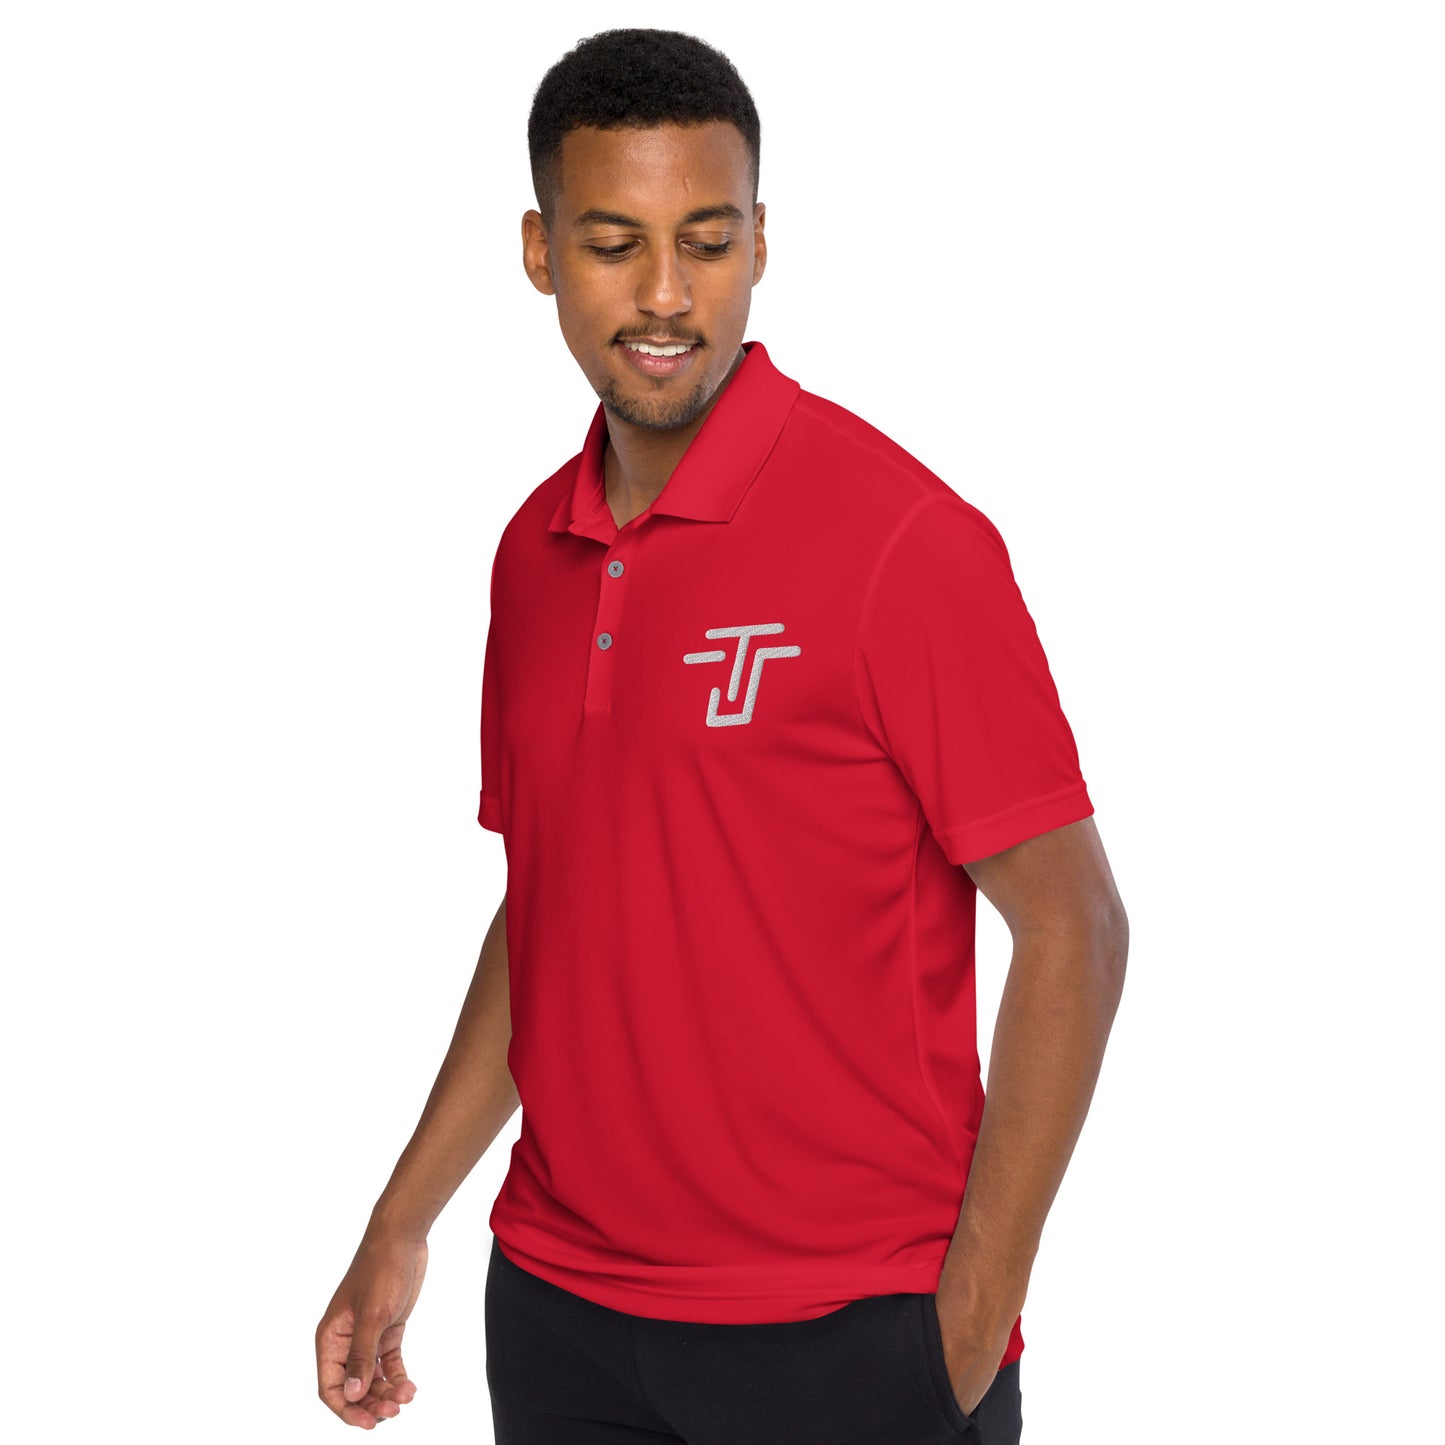 Jacko Brand Adidas Performance Polo Shirt